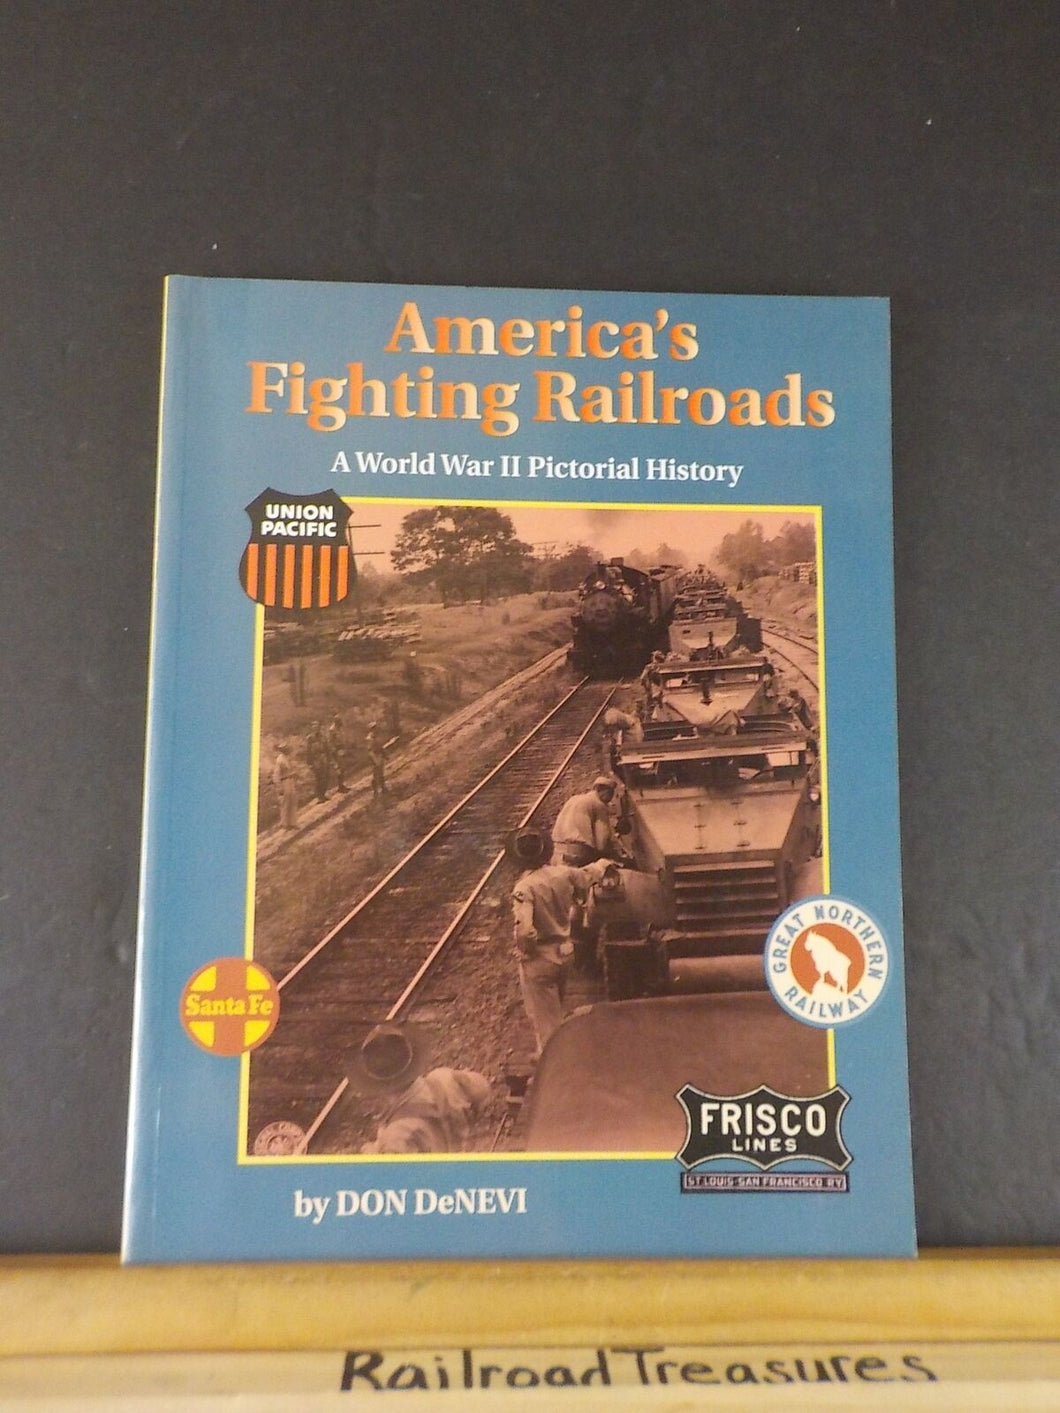 America’s Fighting Railroads A World War II Pictorial History by Don NeNevi Soft